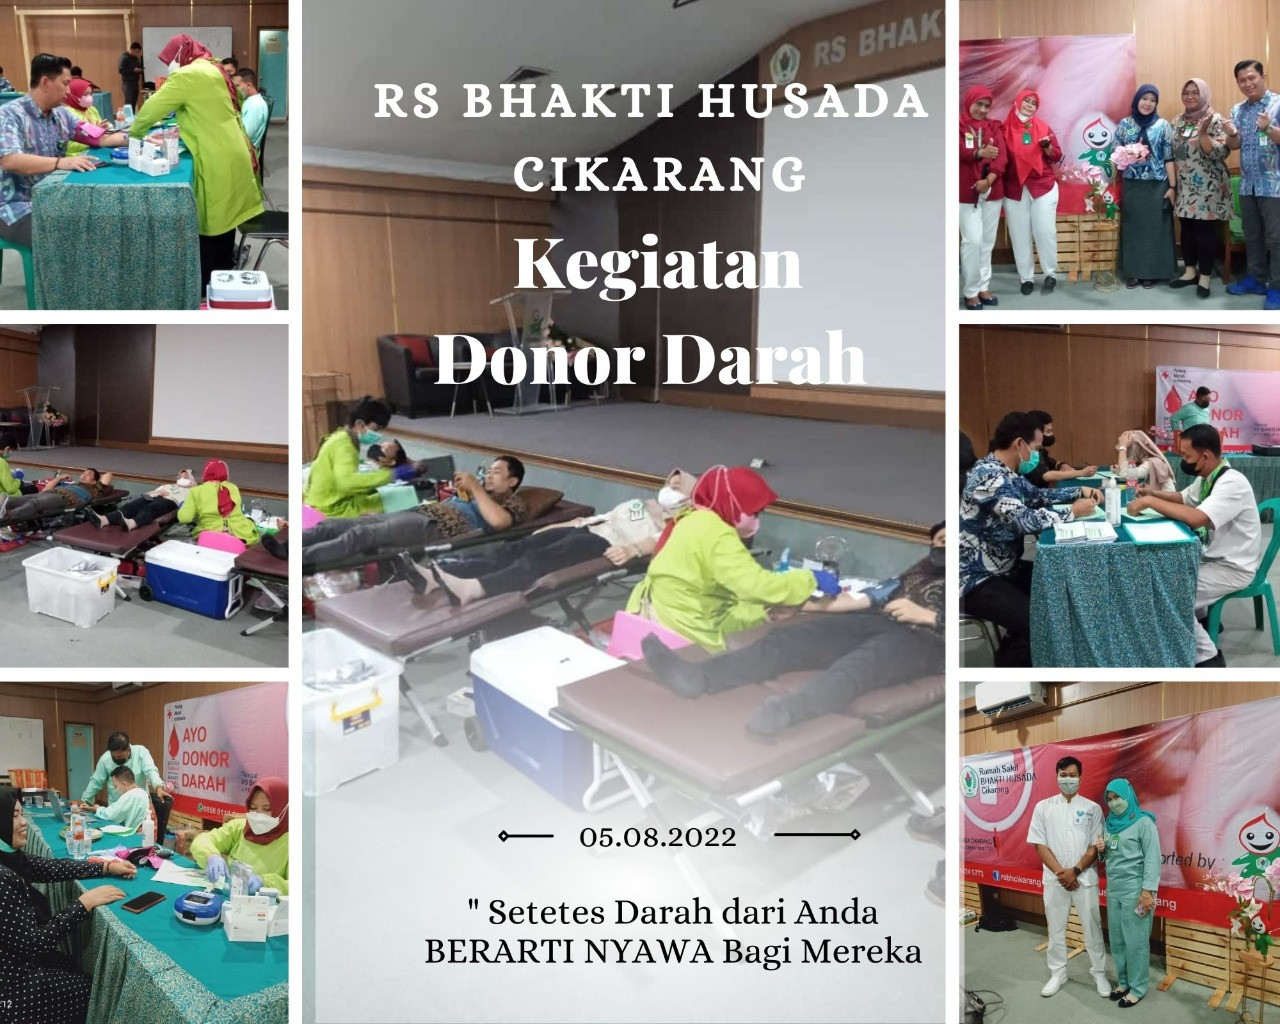 Kegiatan Donor darah RS Bhakti Husada Cikarang bersama PMI Kabupaten Bekasi